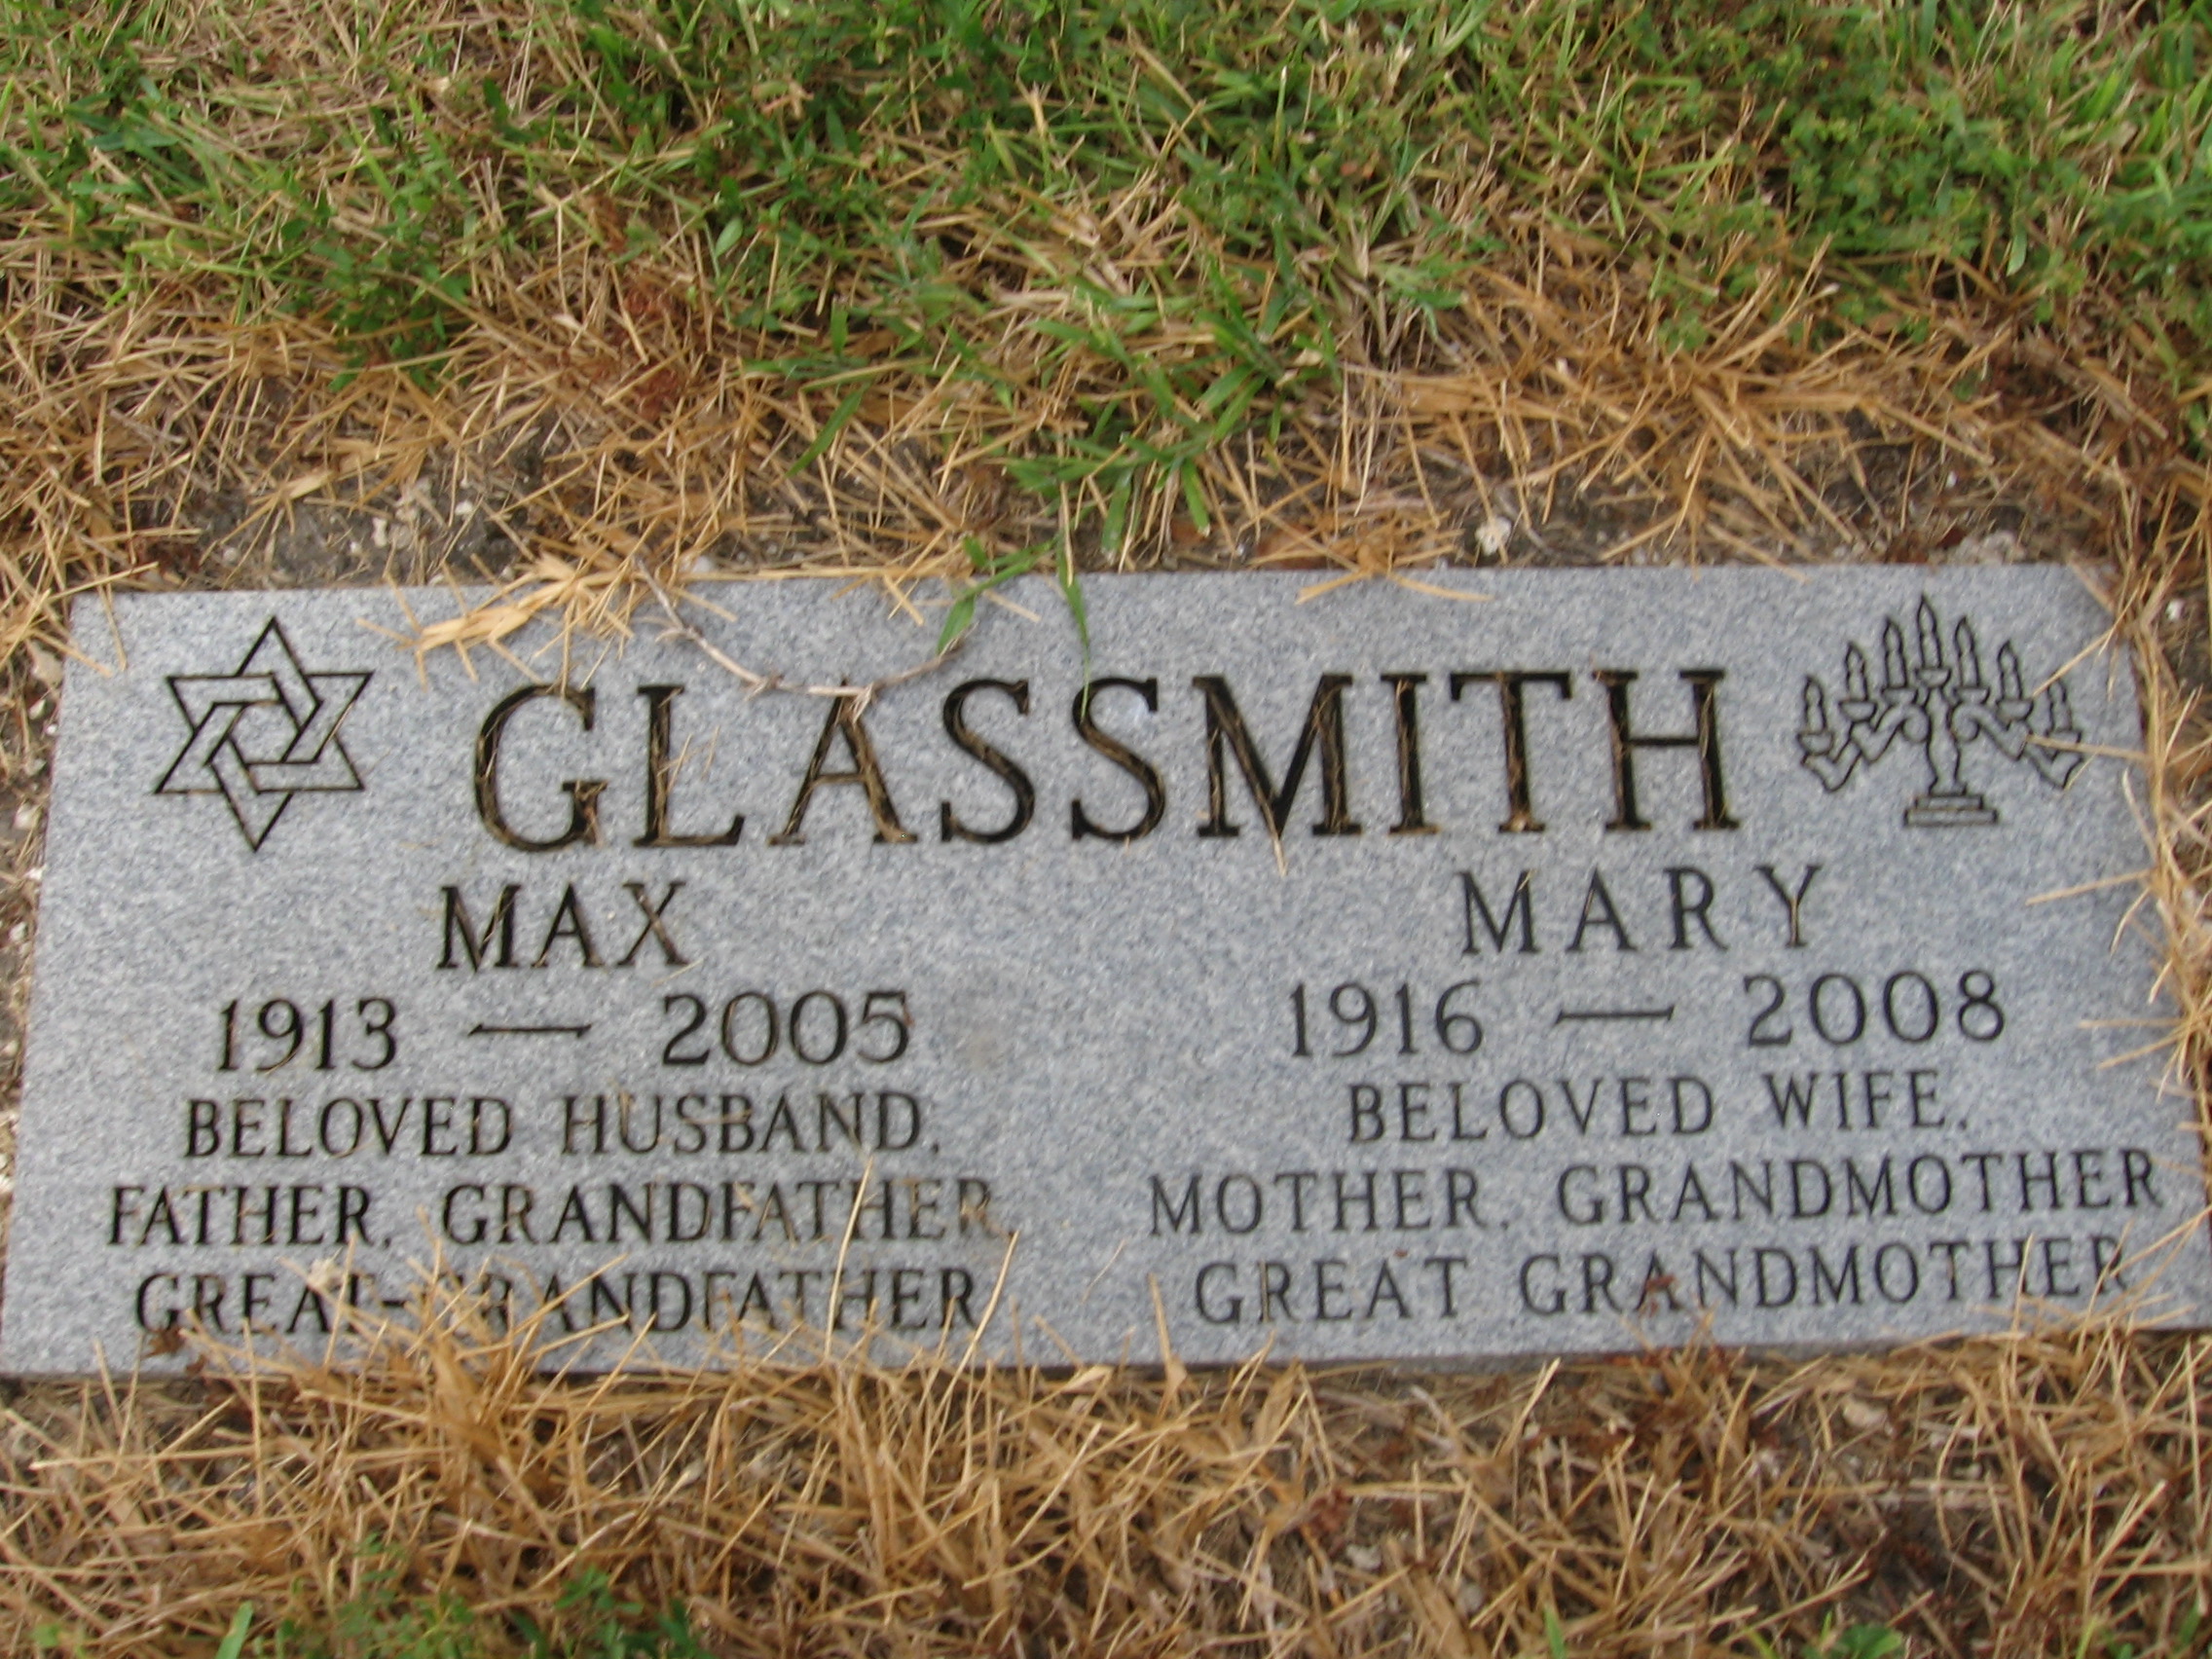 Max Glassmith